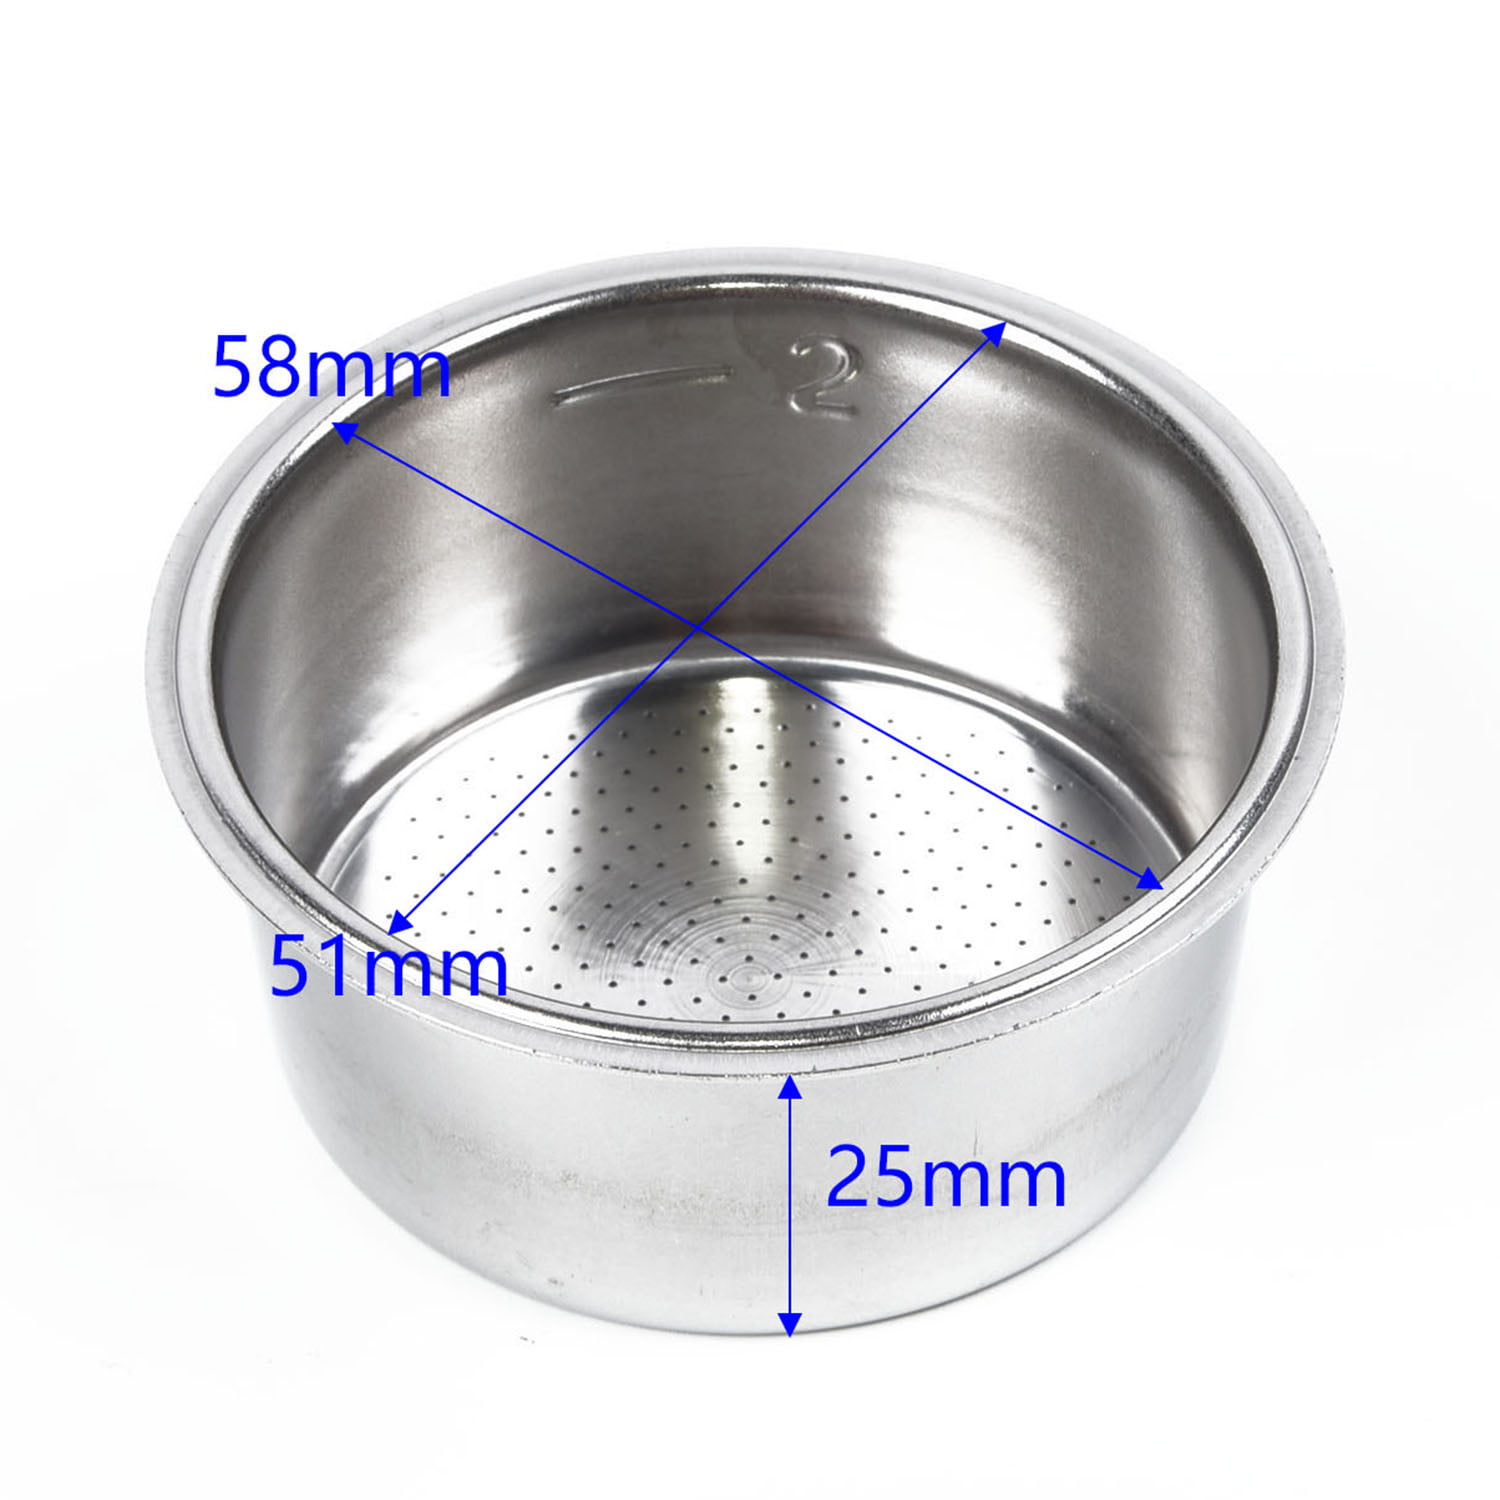 51mm Coffee Cup Non Pressurized Filter Basket For Breville Delonghi Krups US